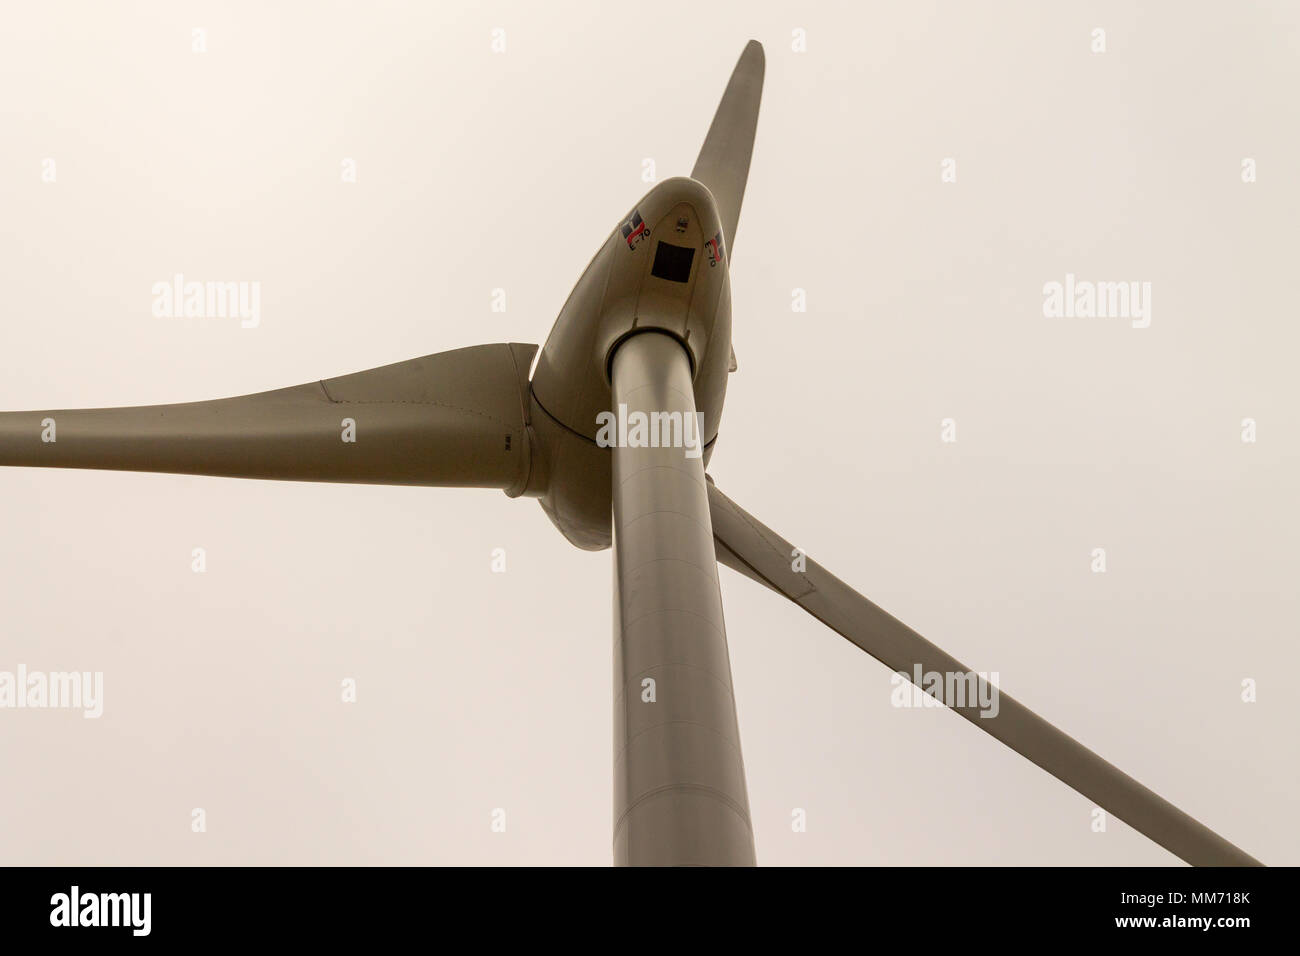 turbine blades spinning on a wind farm, windfarm on a hillside of west cork, ireland Stock Photo